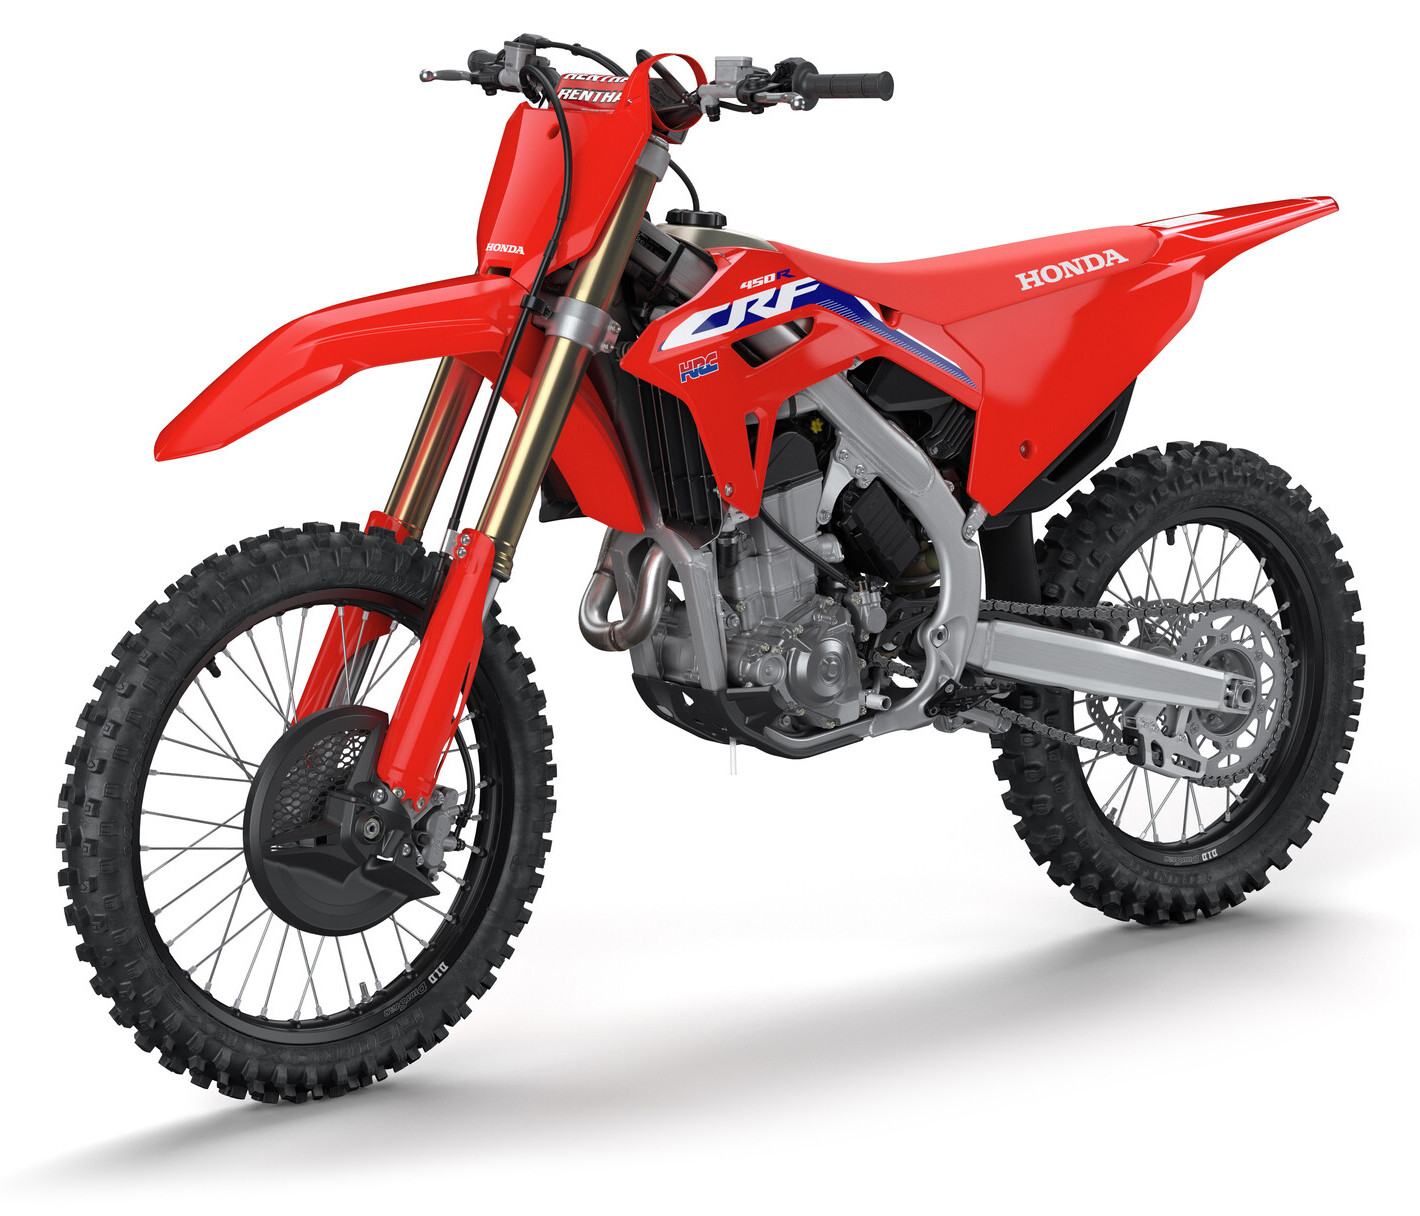 2021 Honda Dirt Bikes New